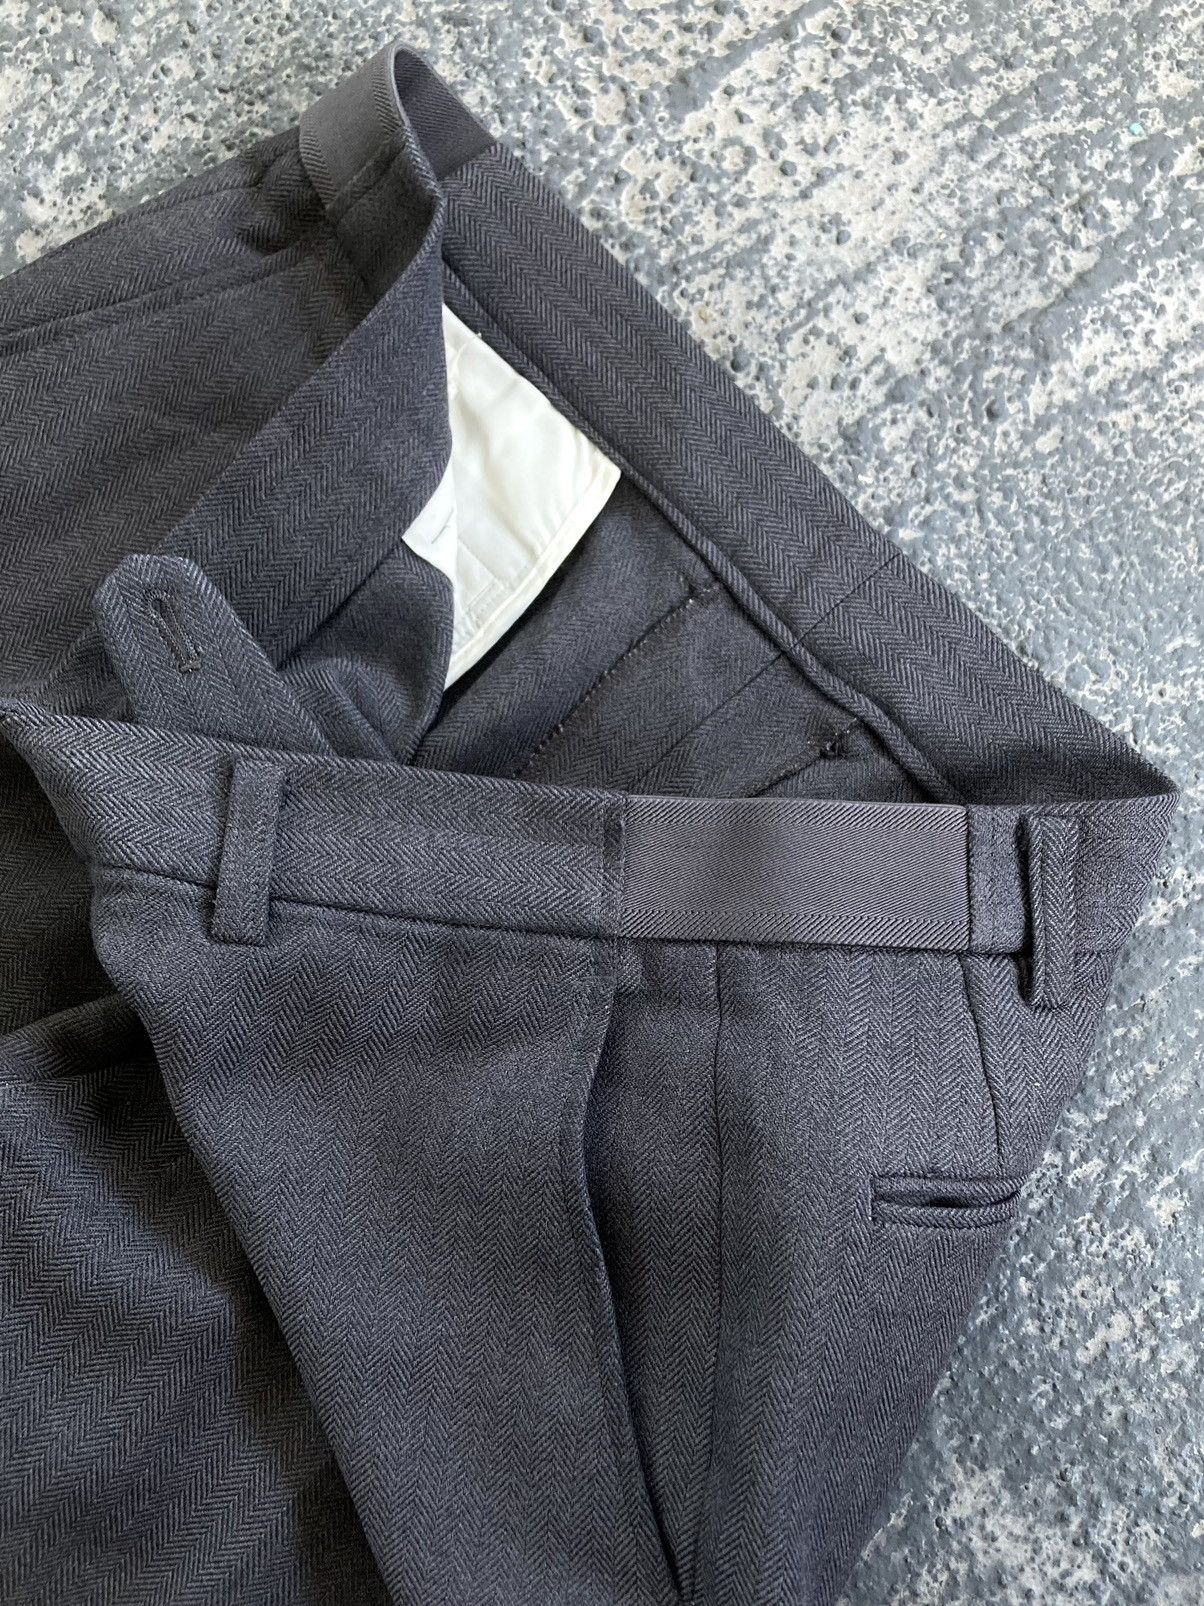 Vintage Japanese Dark Gray Baggy Slacks - 6